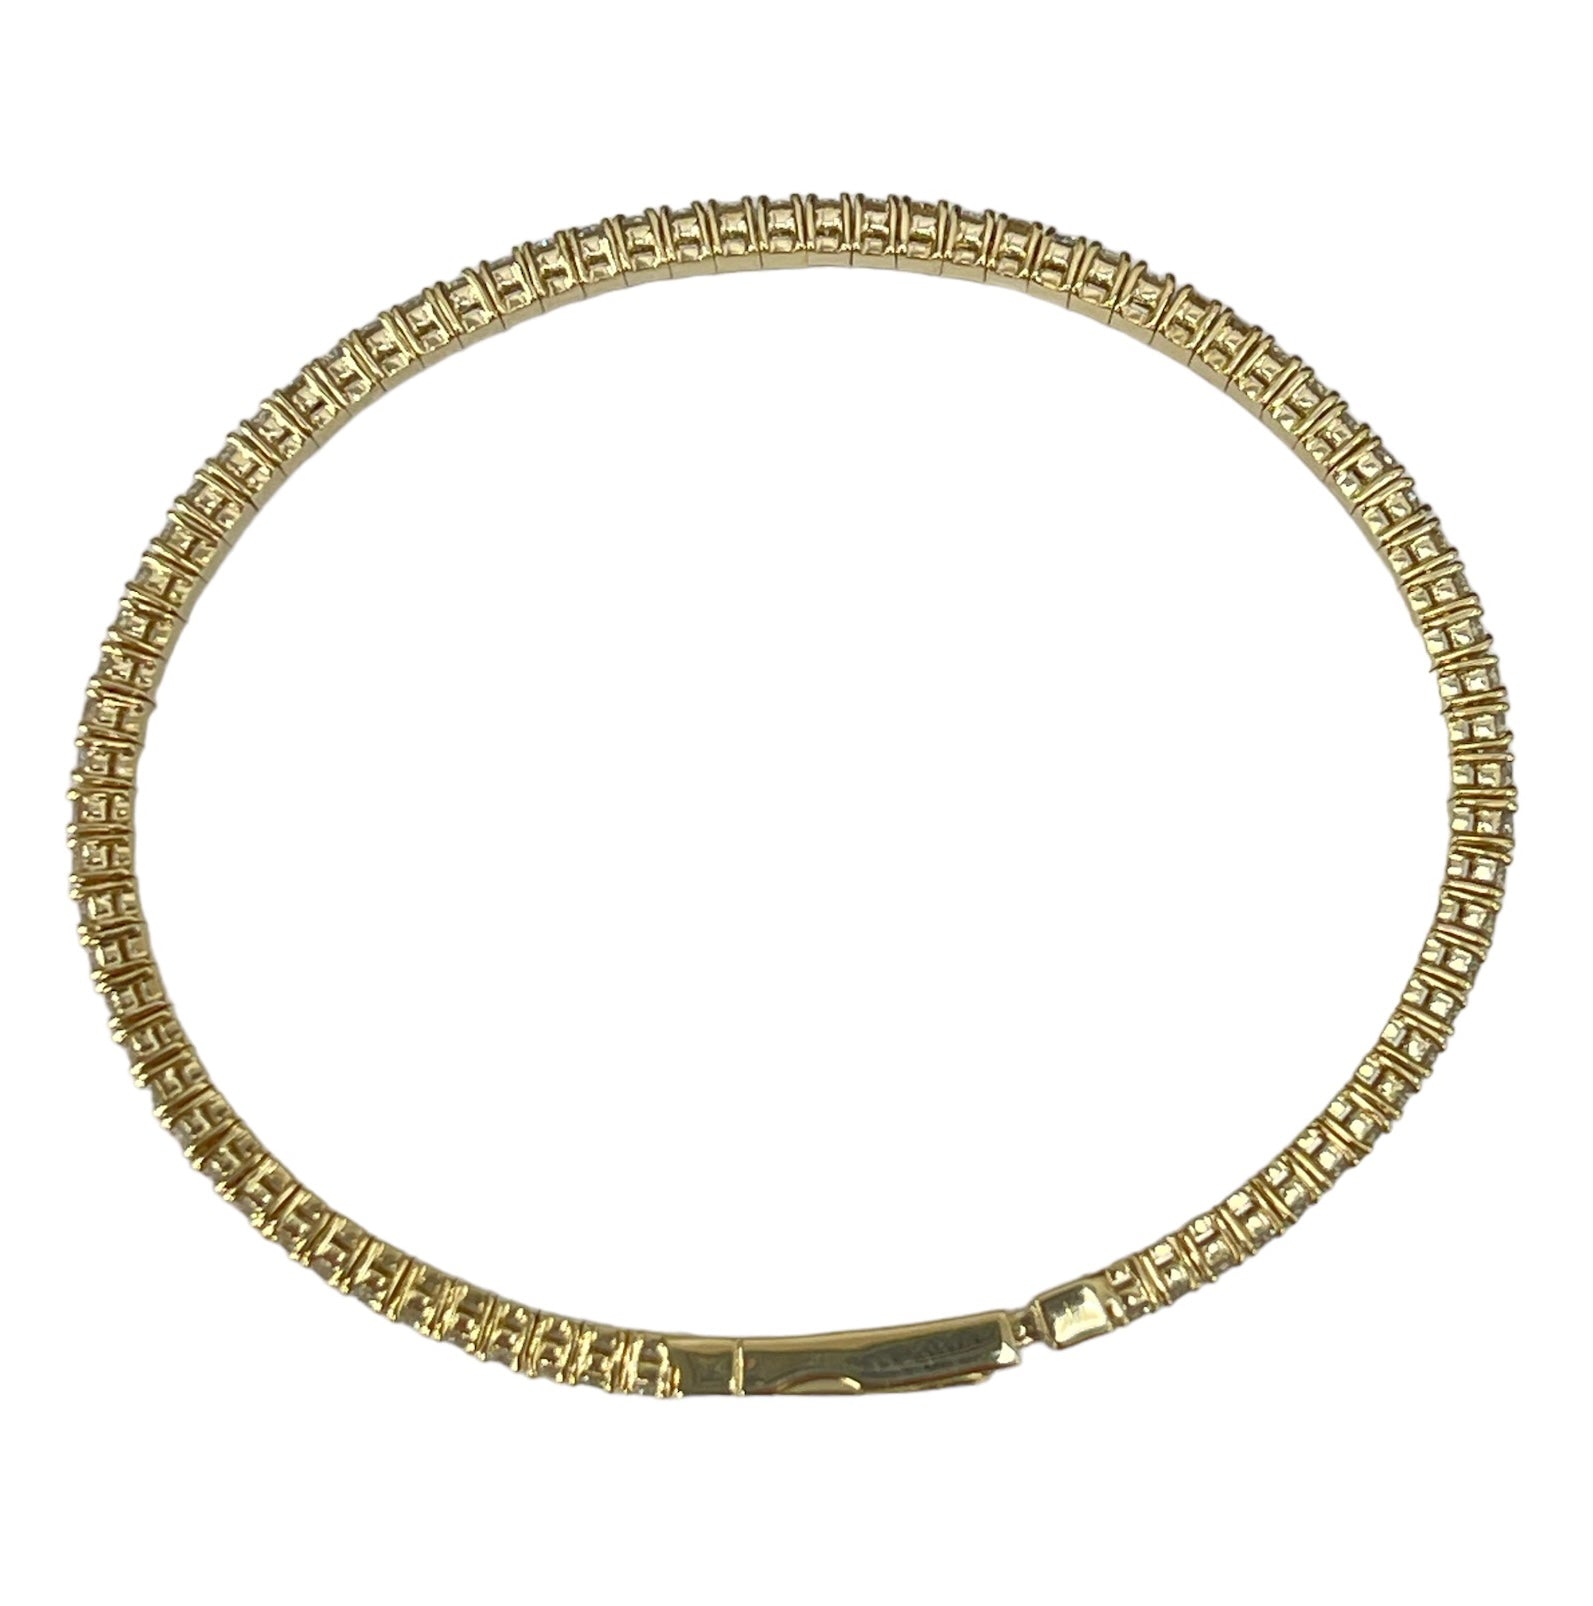 Round Brilliant Flexi Diamond Bangle Bracelet Yellow Gold 14kt